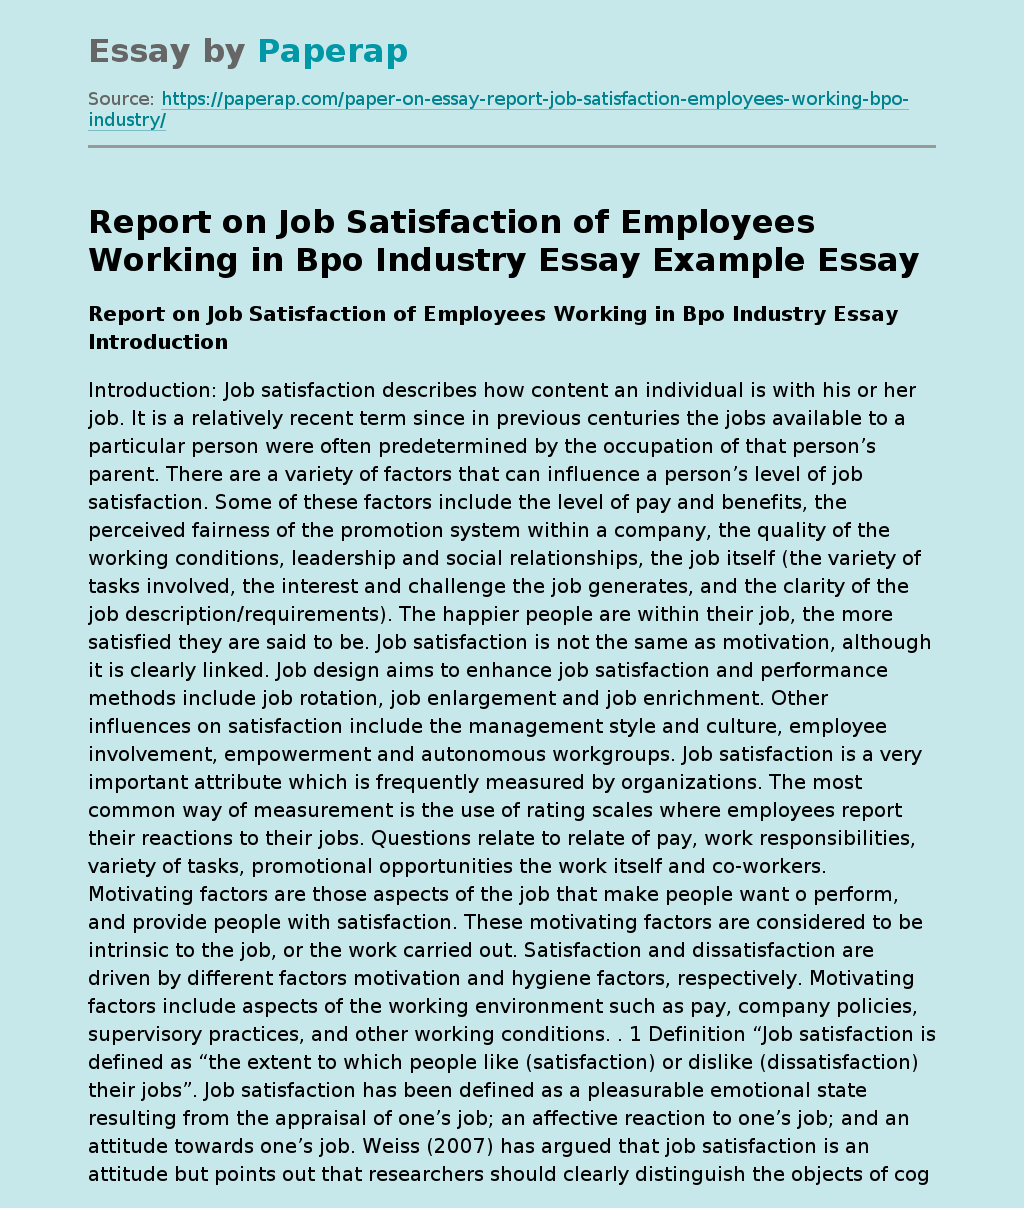 Report on Job Satisfaction of Employees Working in Bpo Industry Essay Example